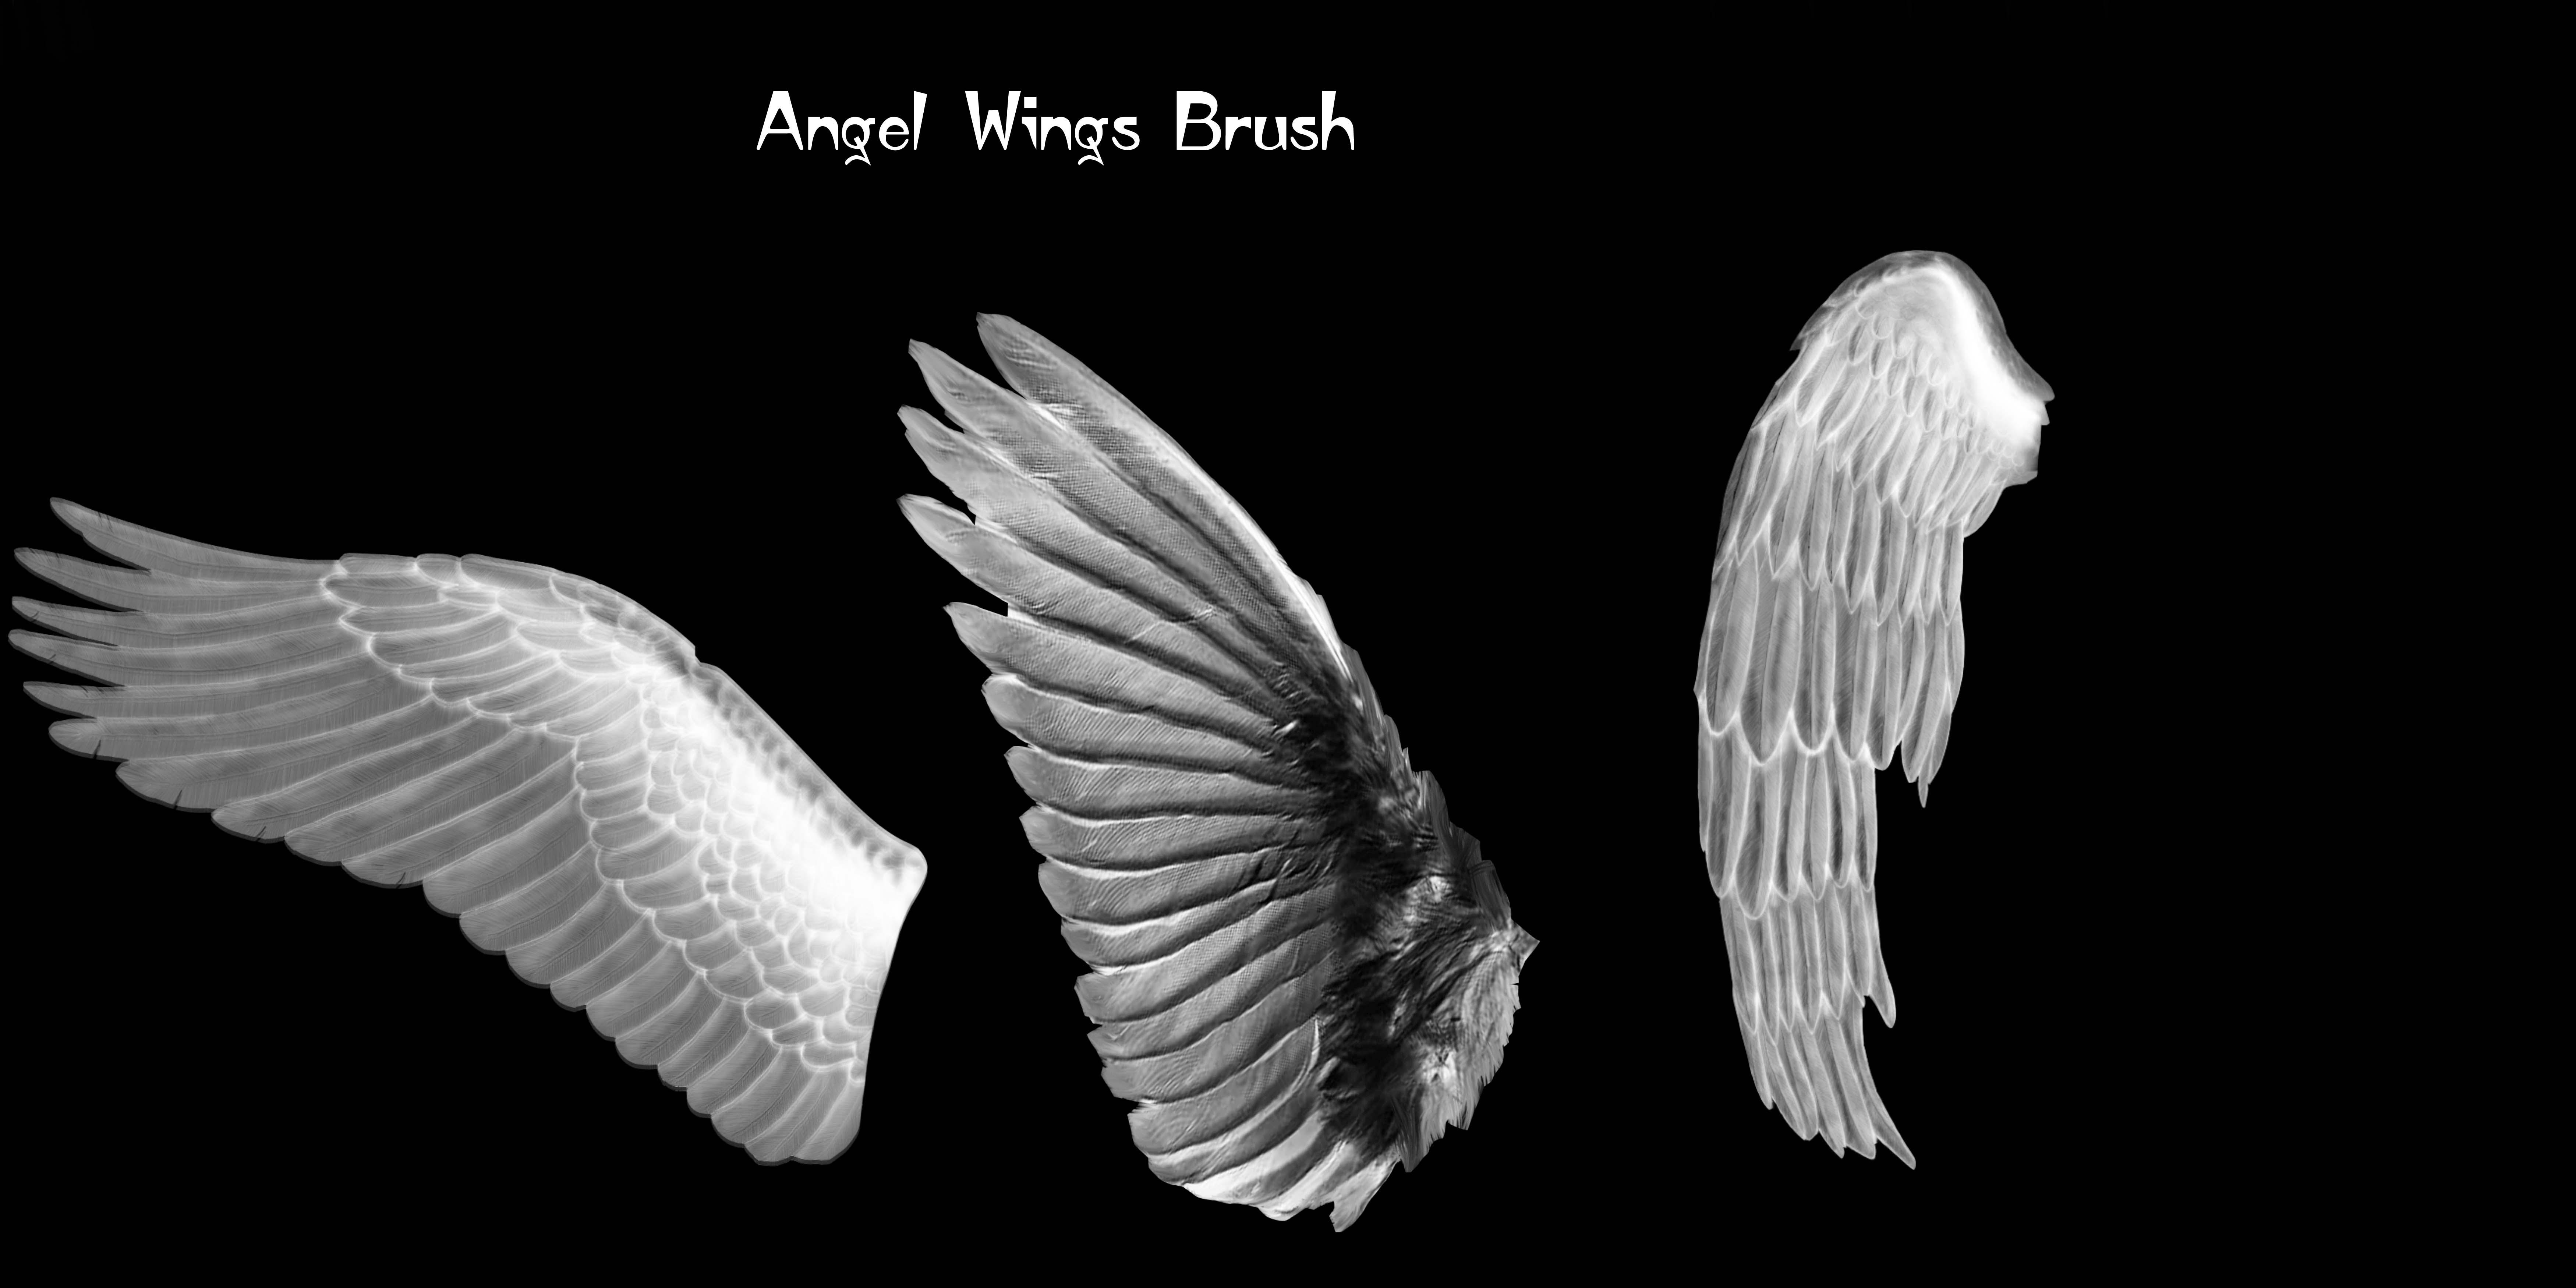 Agel wings brush by